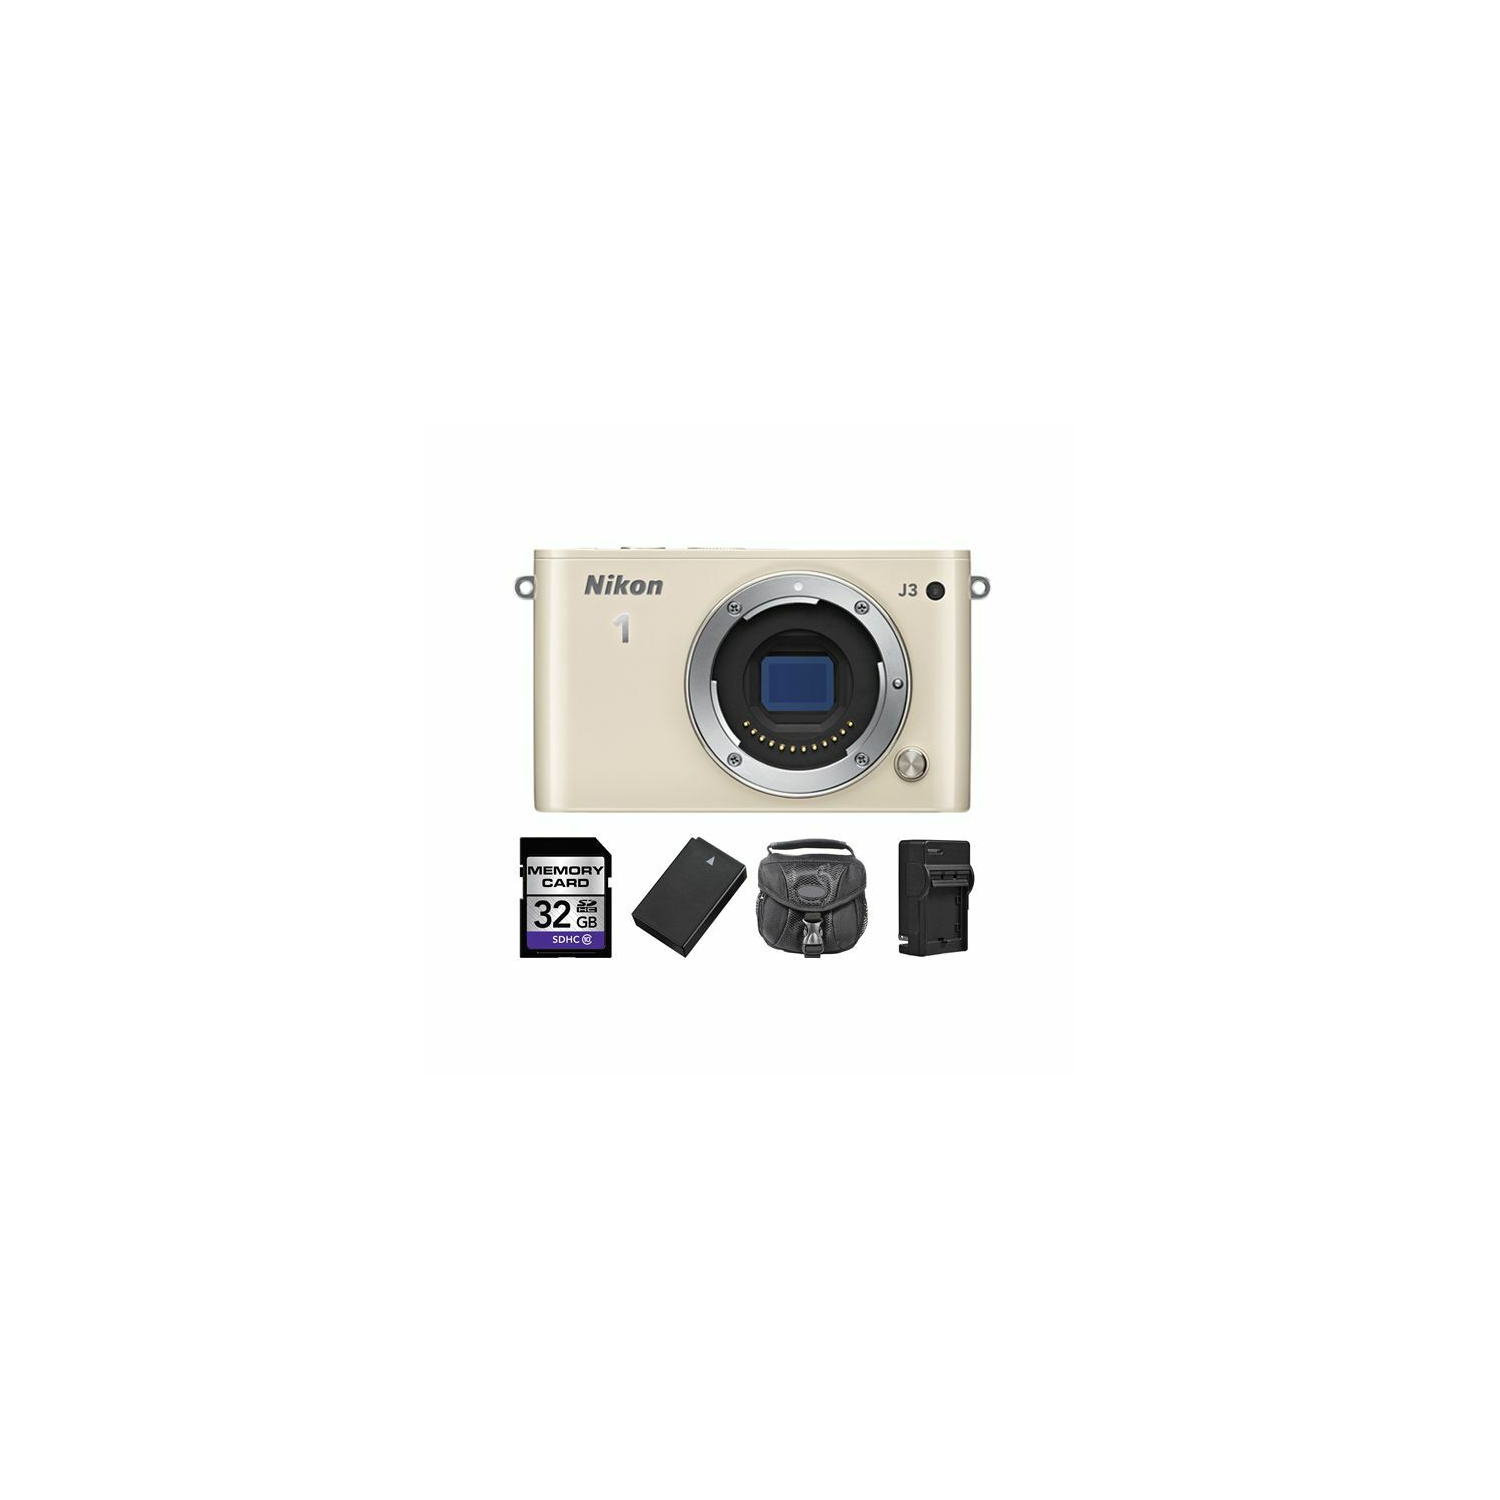 Nikon 1 J3 Mirrorless Digital Camera - Beige + 2 Batteries, 32GB & More